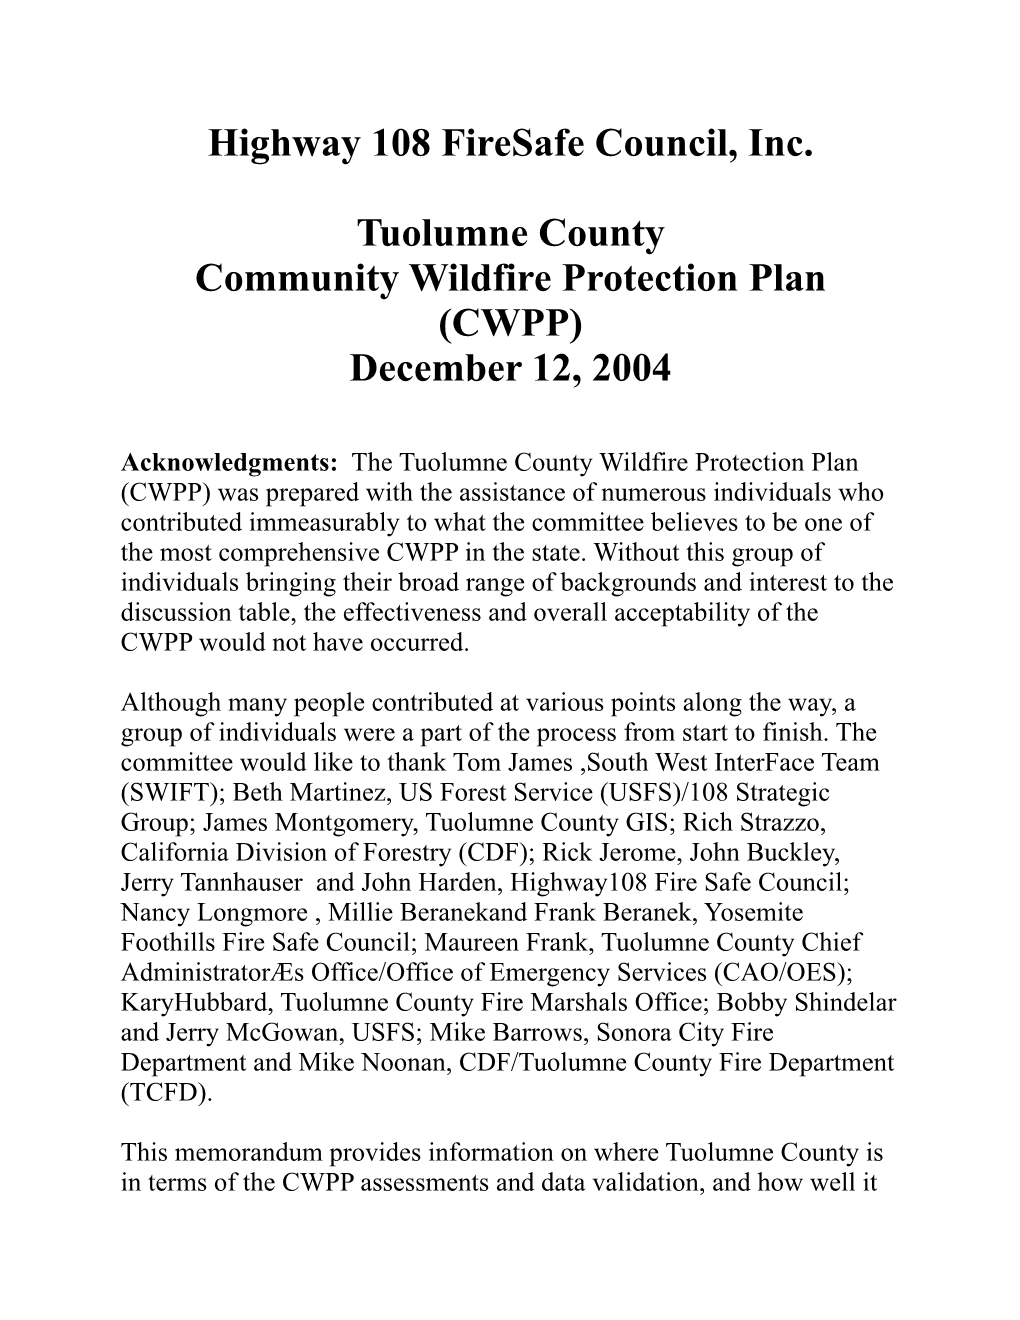 Highway 108 Firesafe Council, Inc. Tuolumne County Community